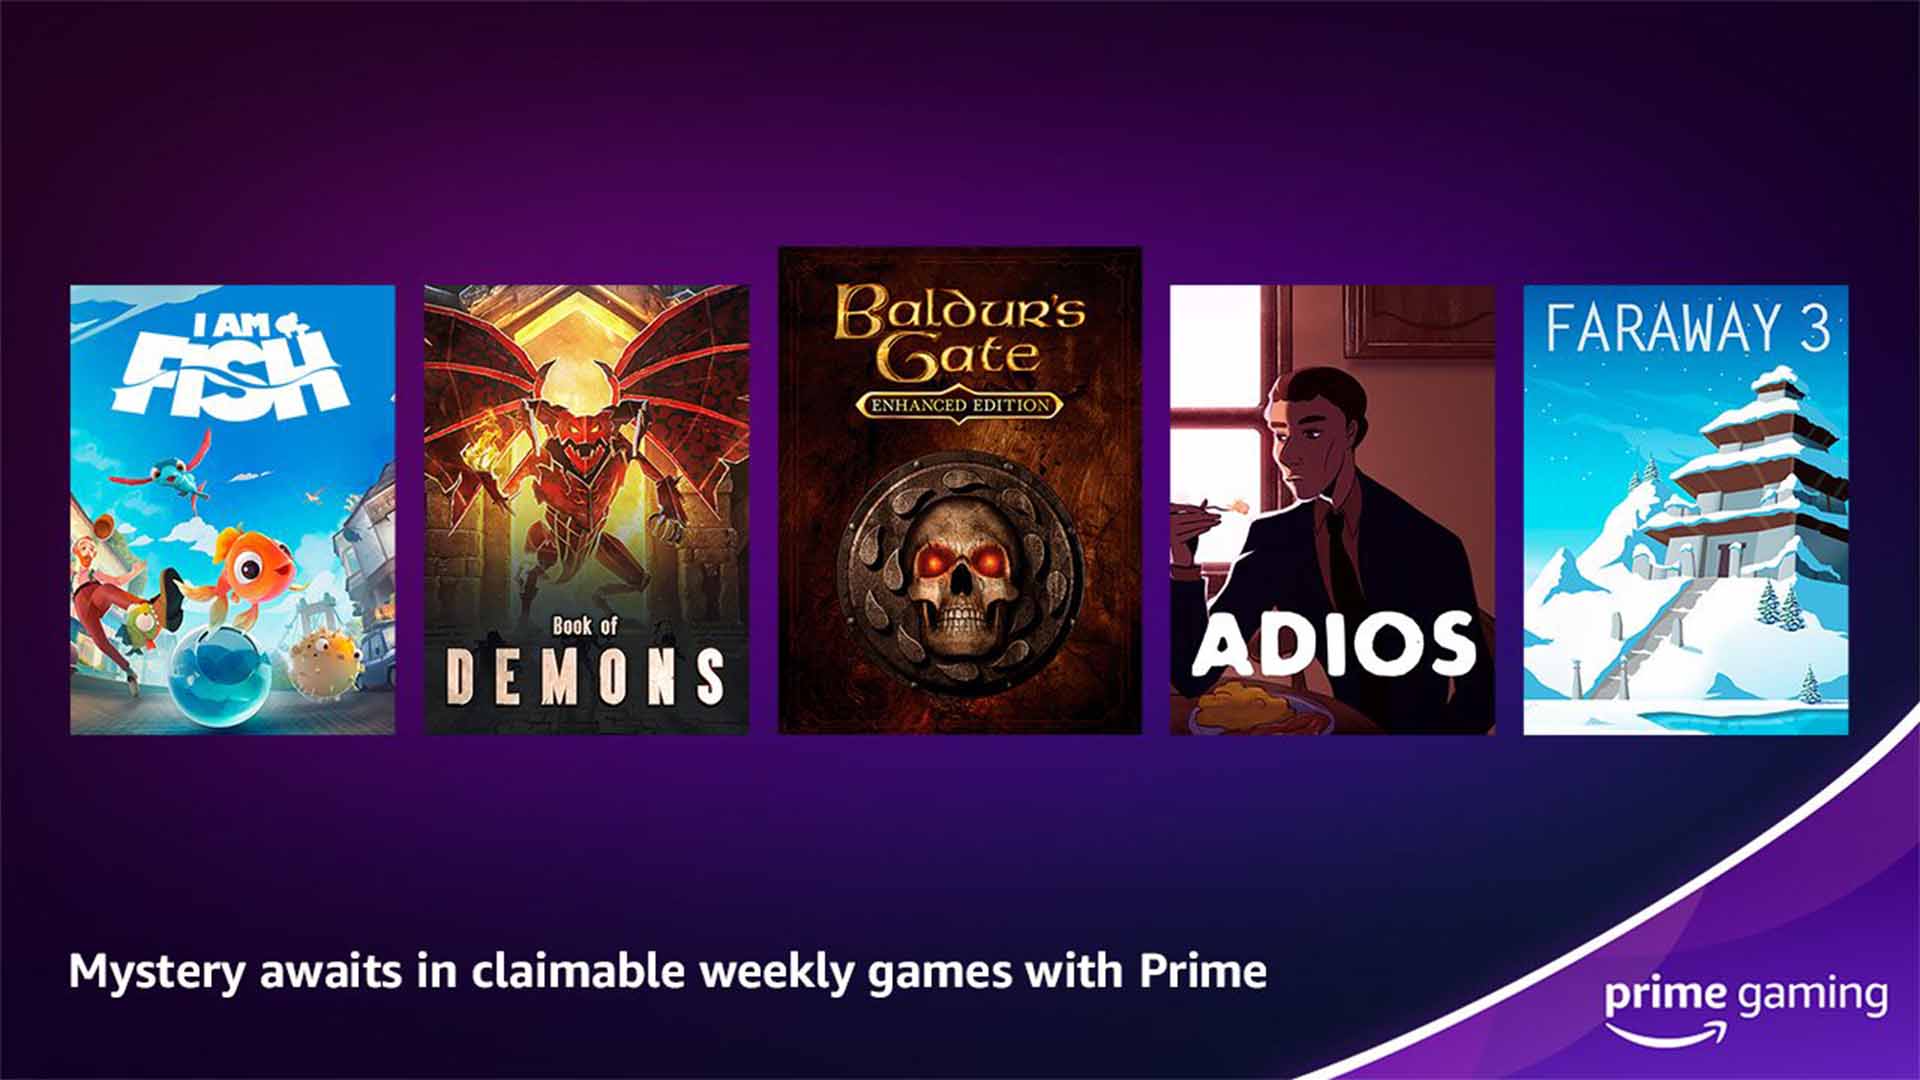 Prime Gaming December offerings include Quake, FIFA 23 freebies